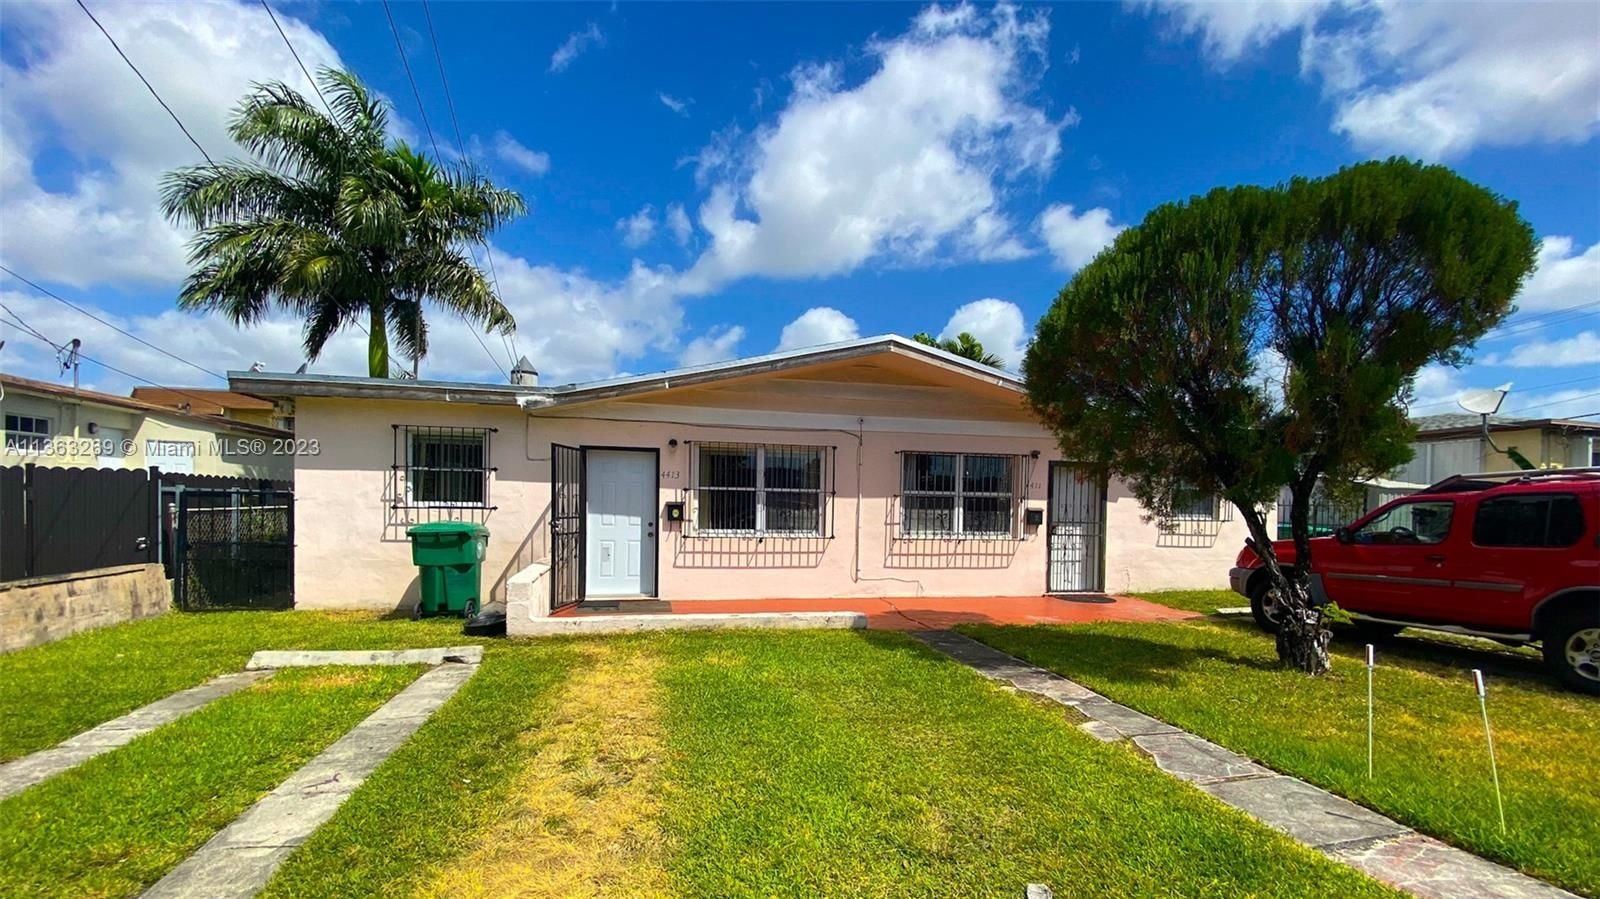 Real estate property located at 4413 9th St, Miami-Dade County, Miami, FL